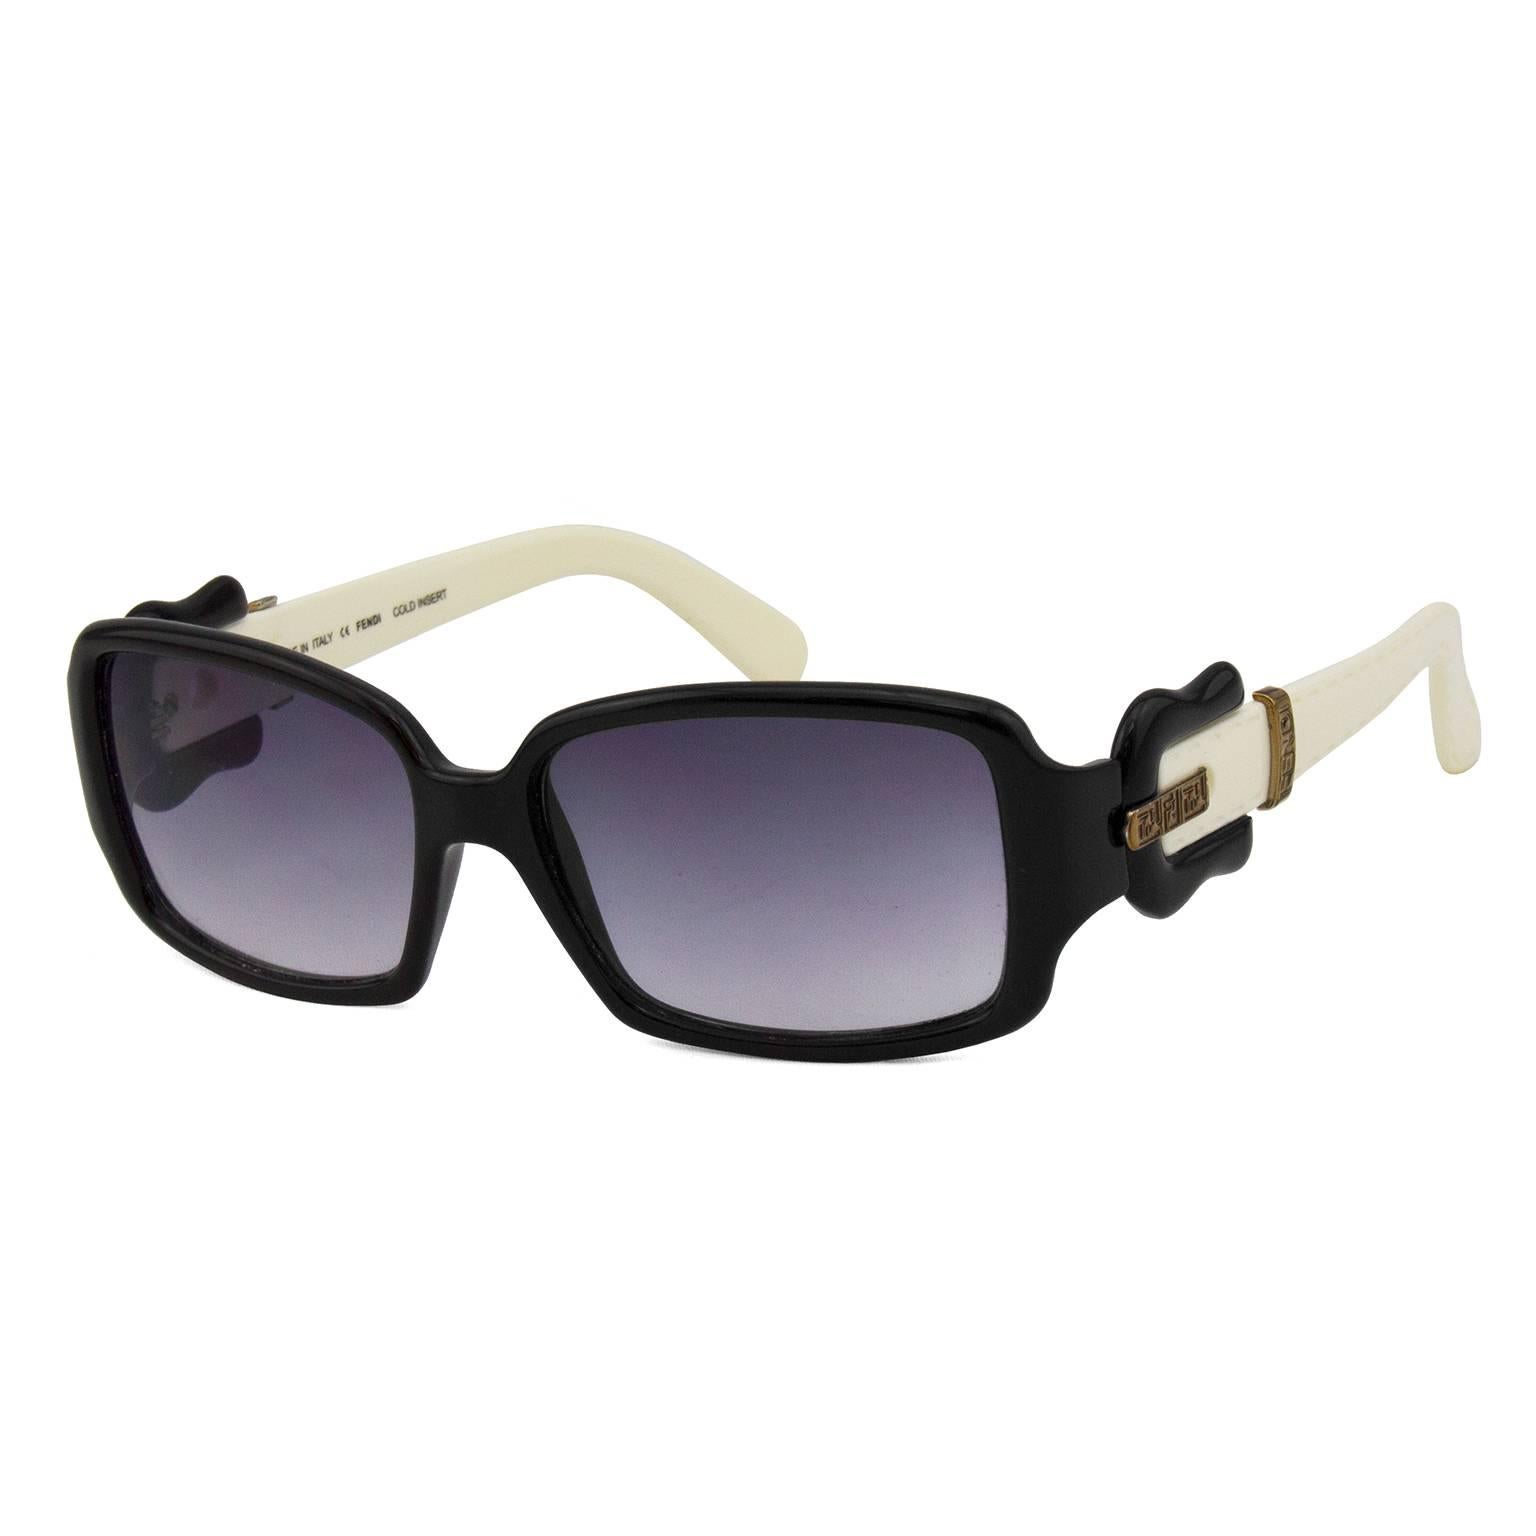 2000s Fendi Black & Cream Sunglasses with Buckle Detail 